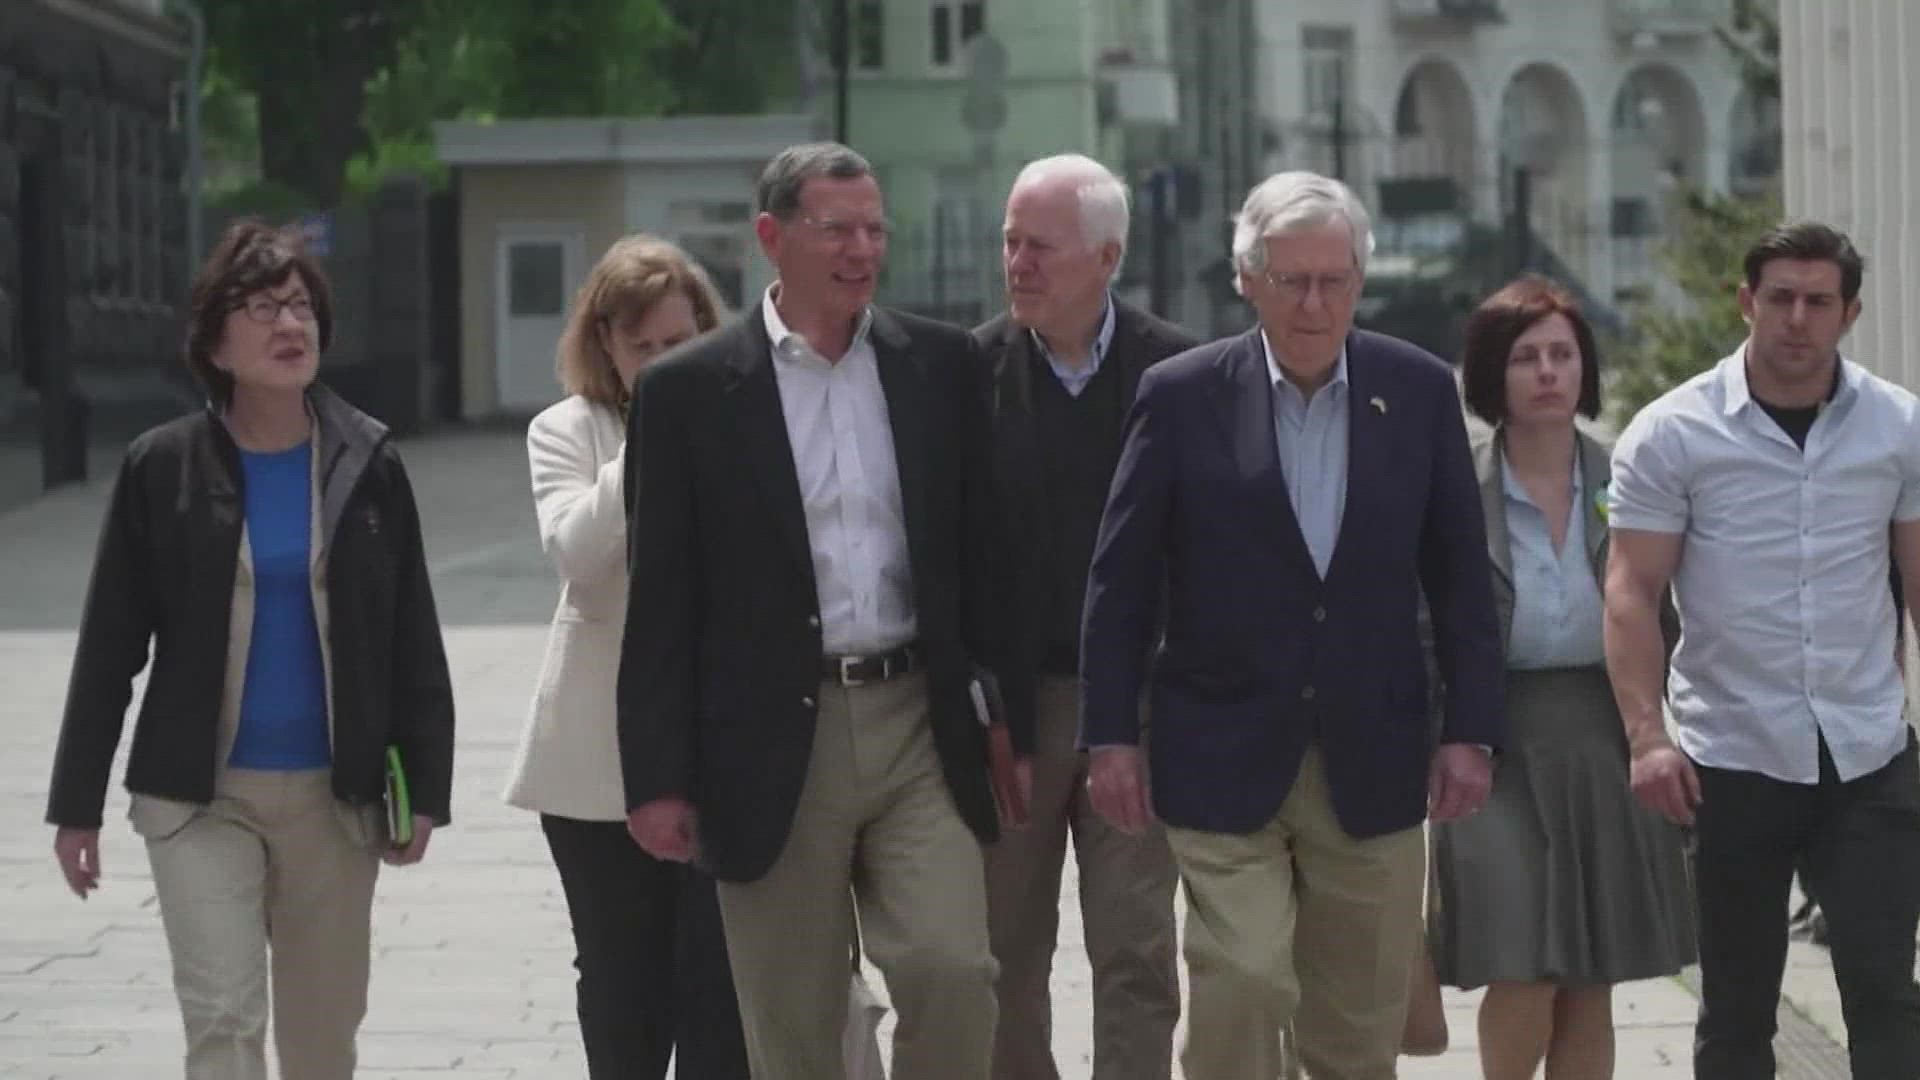 Collins went to Ukraine with a group of Republian senators